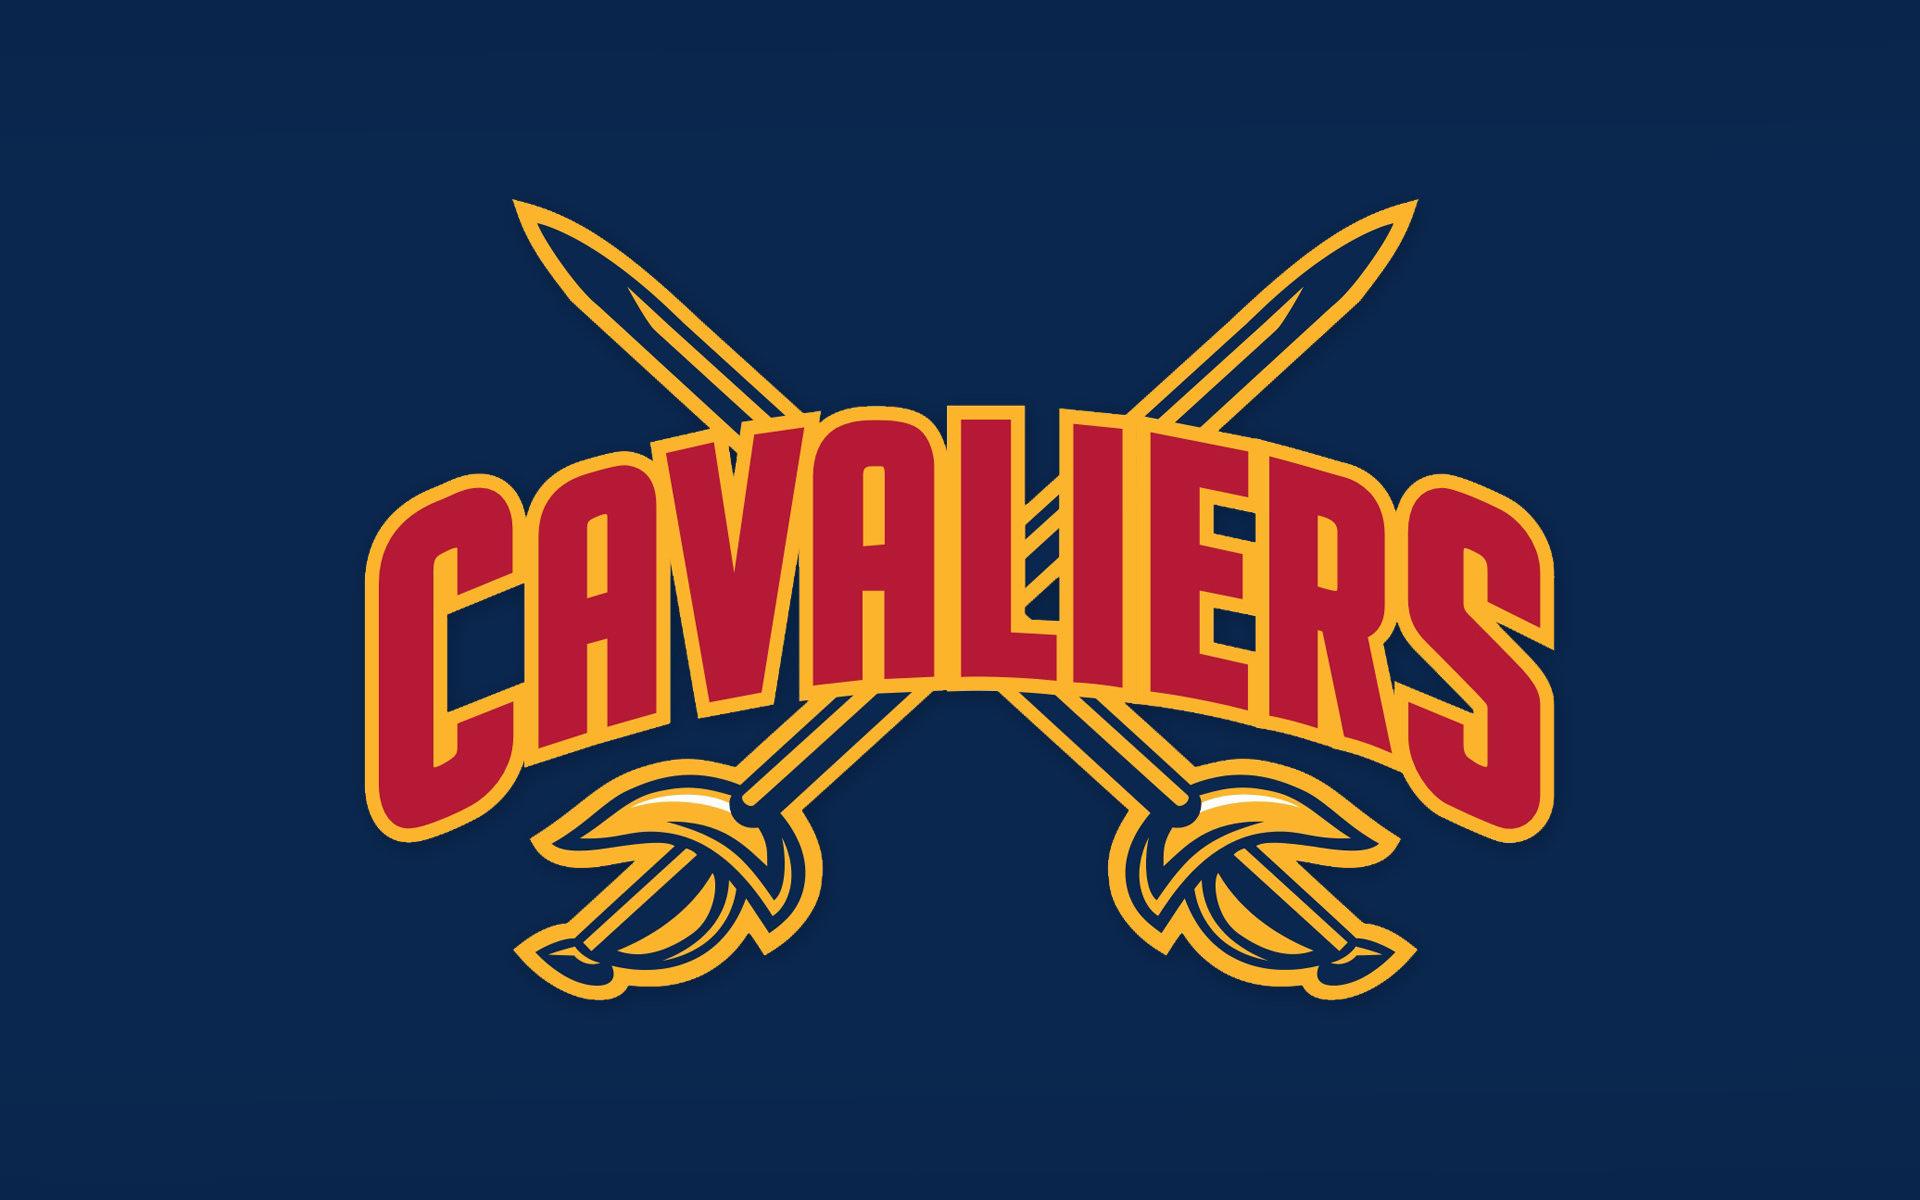 Cleveland Cavaliers (CAVS) wallpaper HD for desktop background